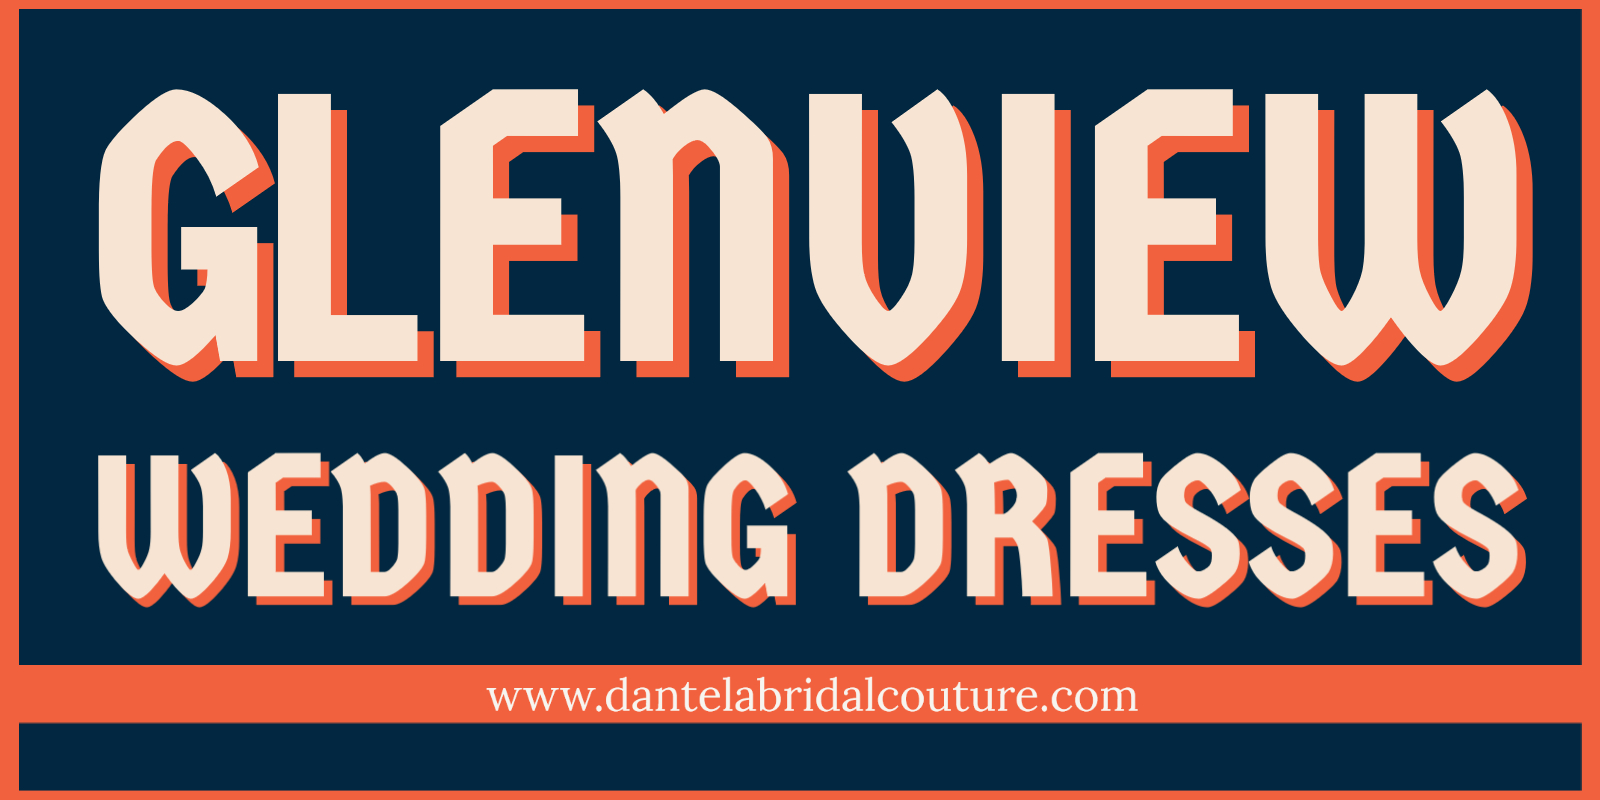 Glenview Wedding Dresses